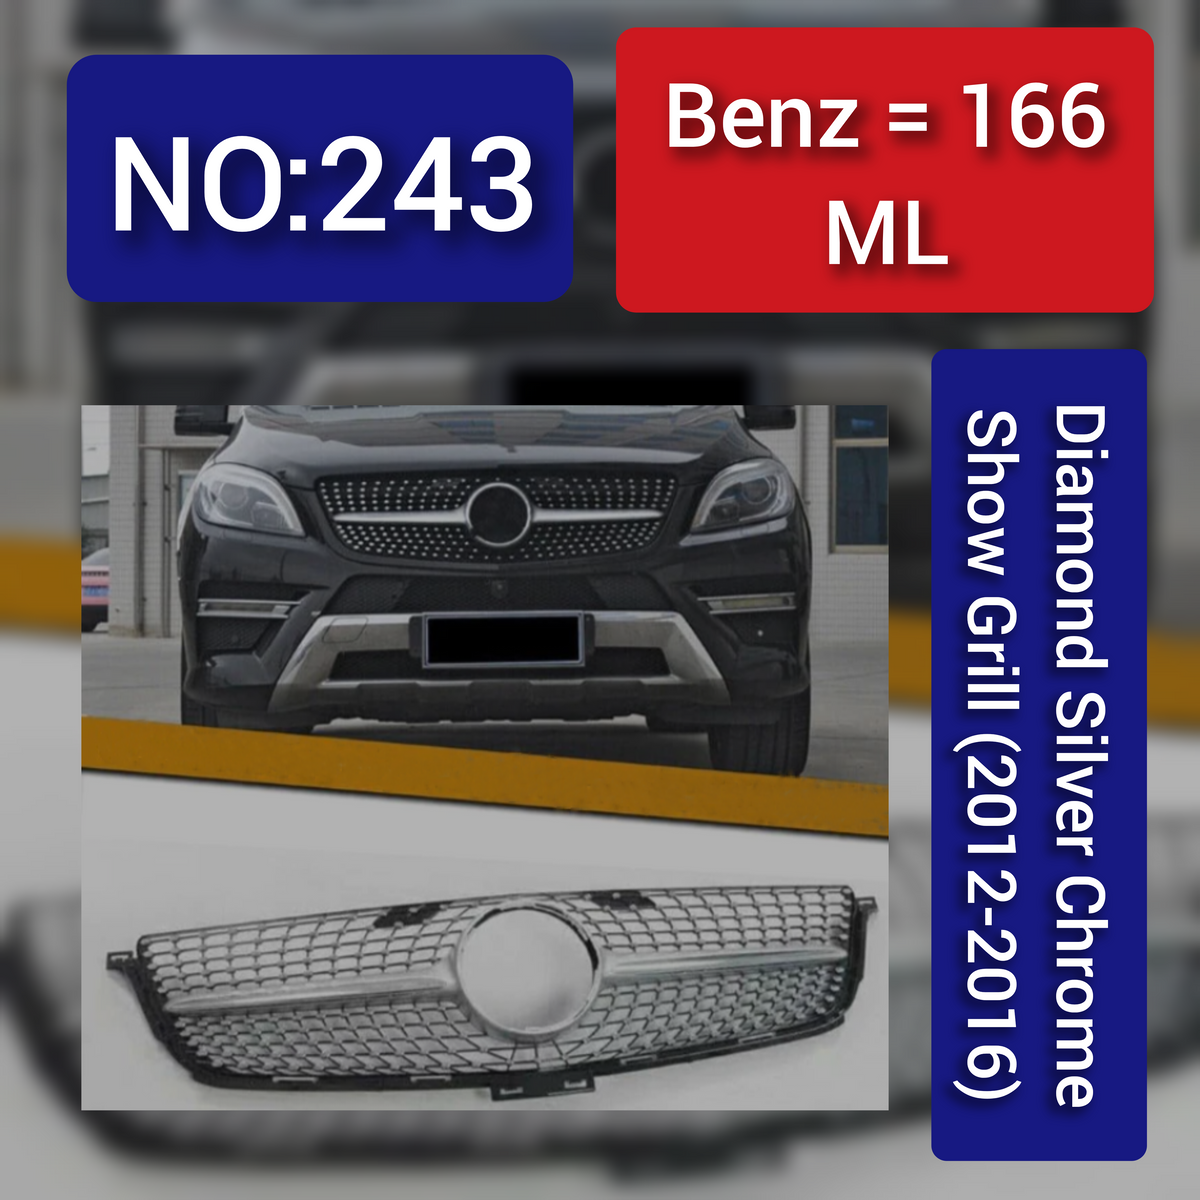 Benz = 166 ML Diamond Silver Chrome Show Grill (2012-2016) Tag 243